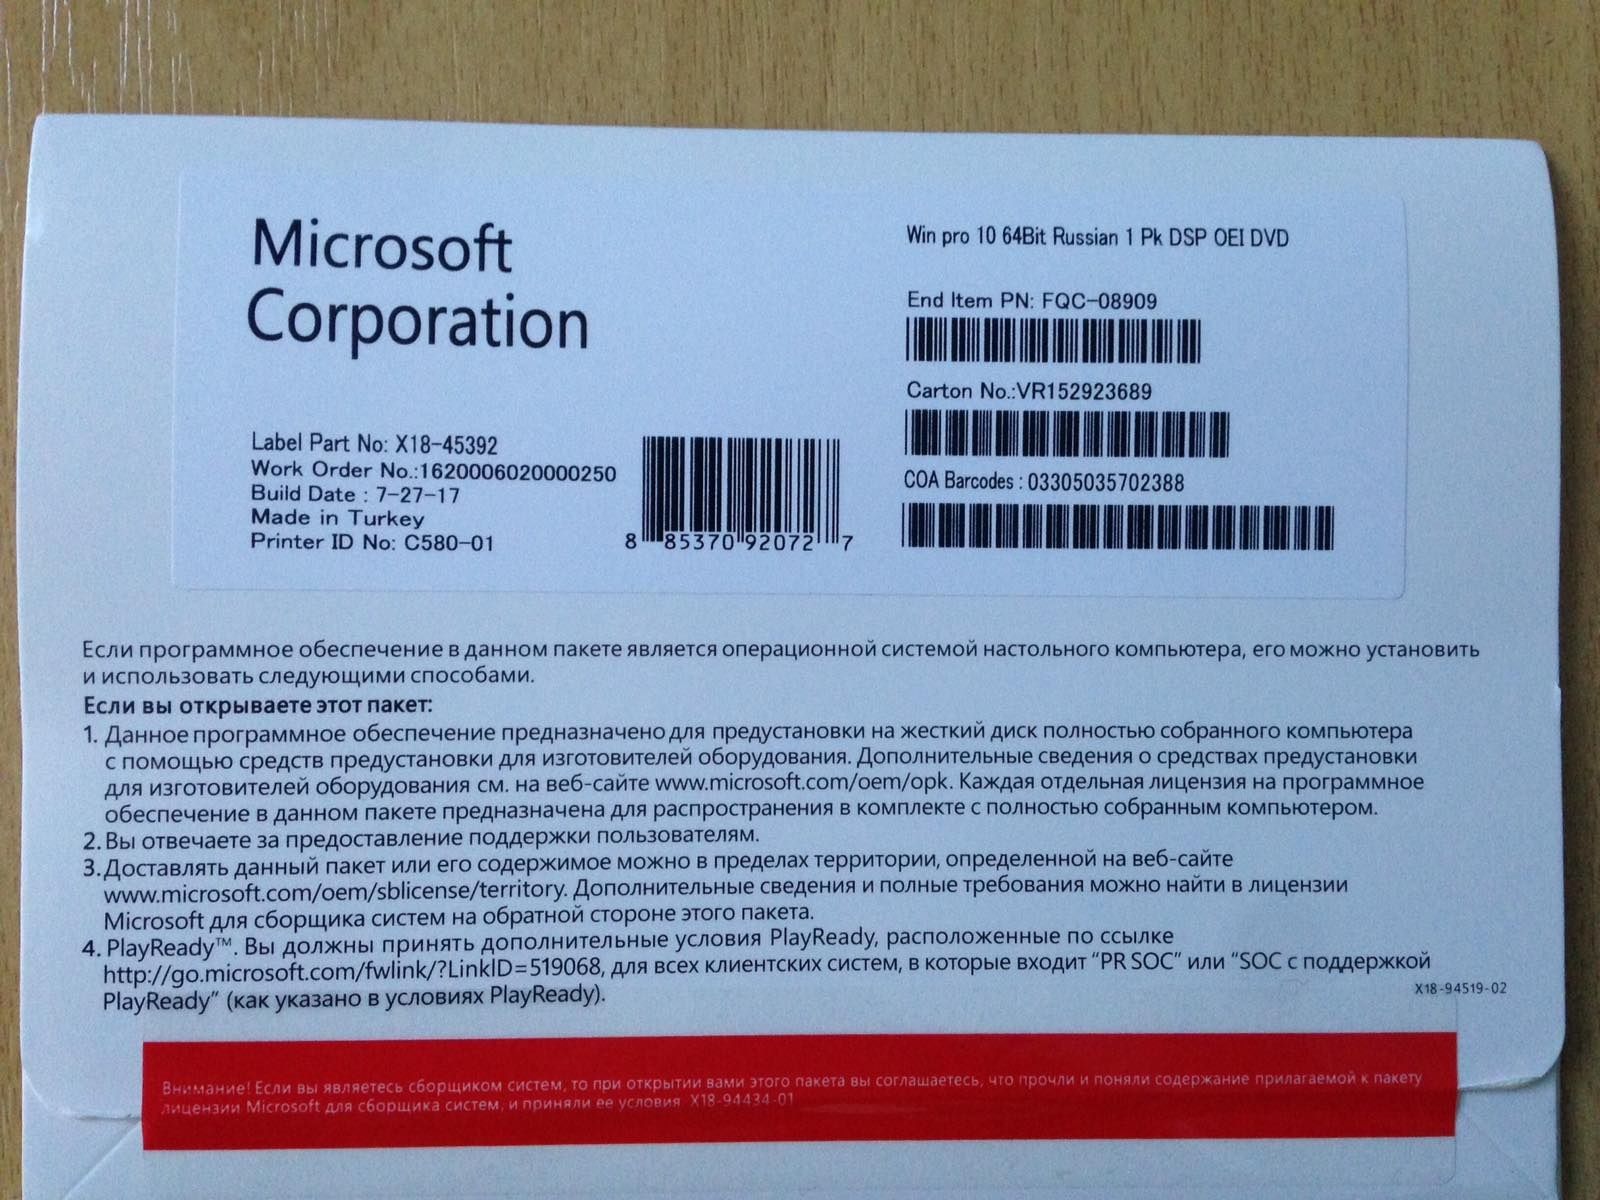 Microsoft Windows 10 Pro DVD OEM 1pk 64-bit (FQC-08909)